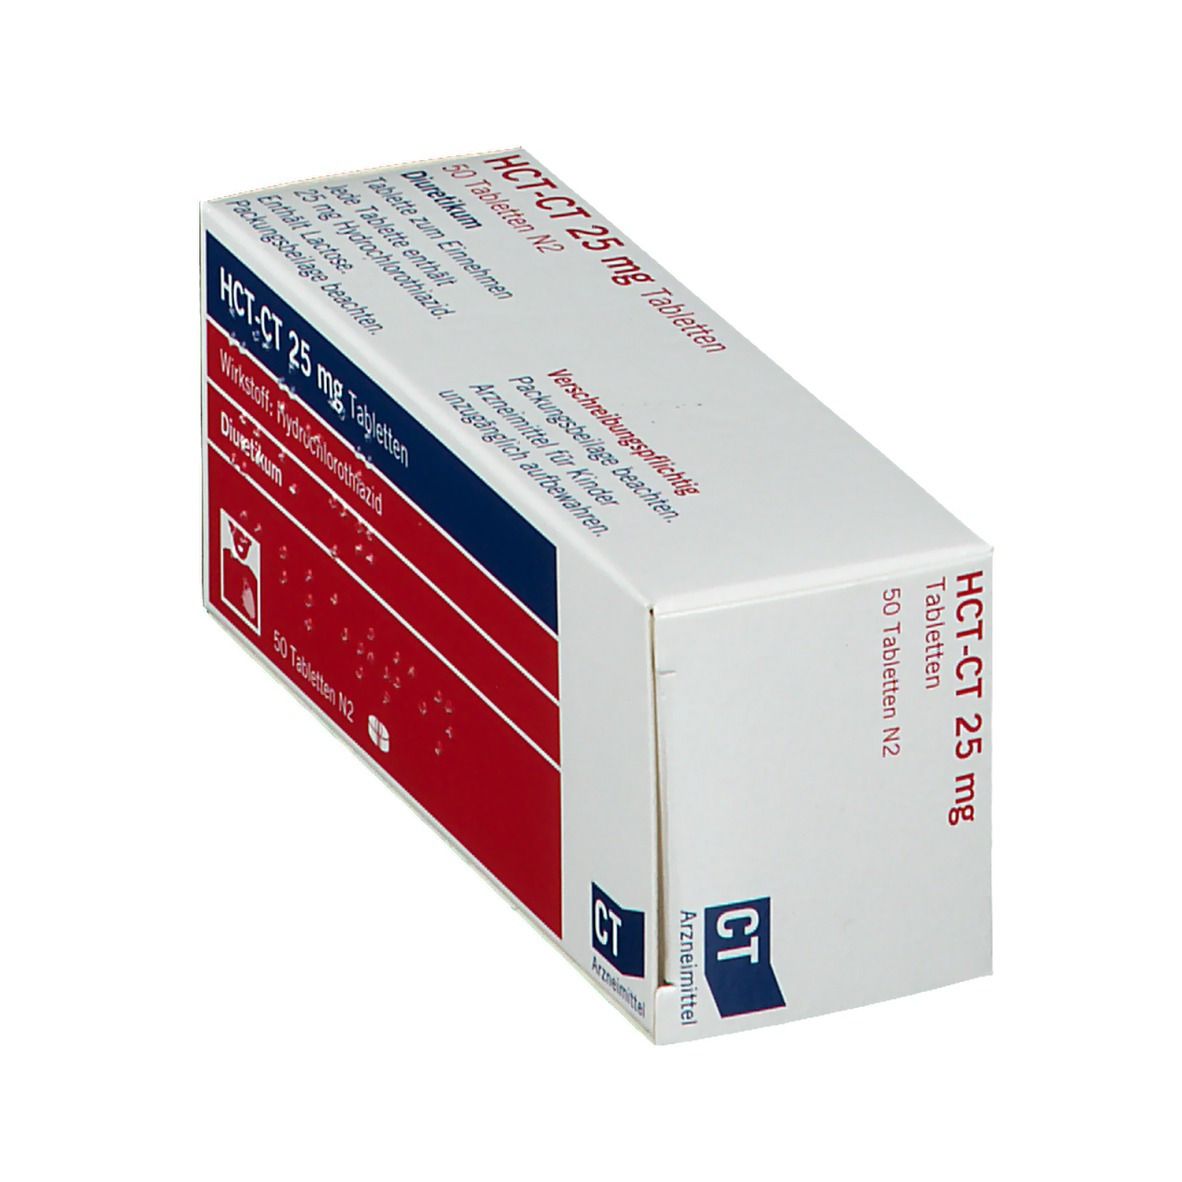 HCT-CT 25 mg